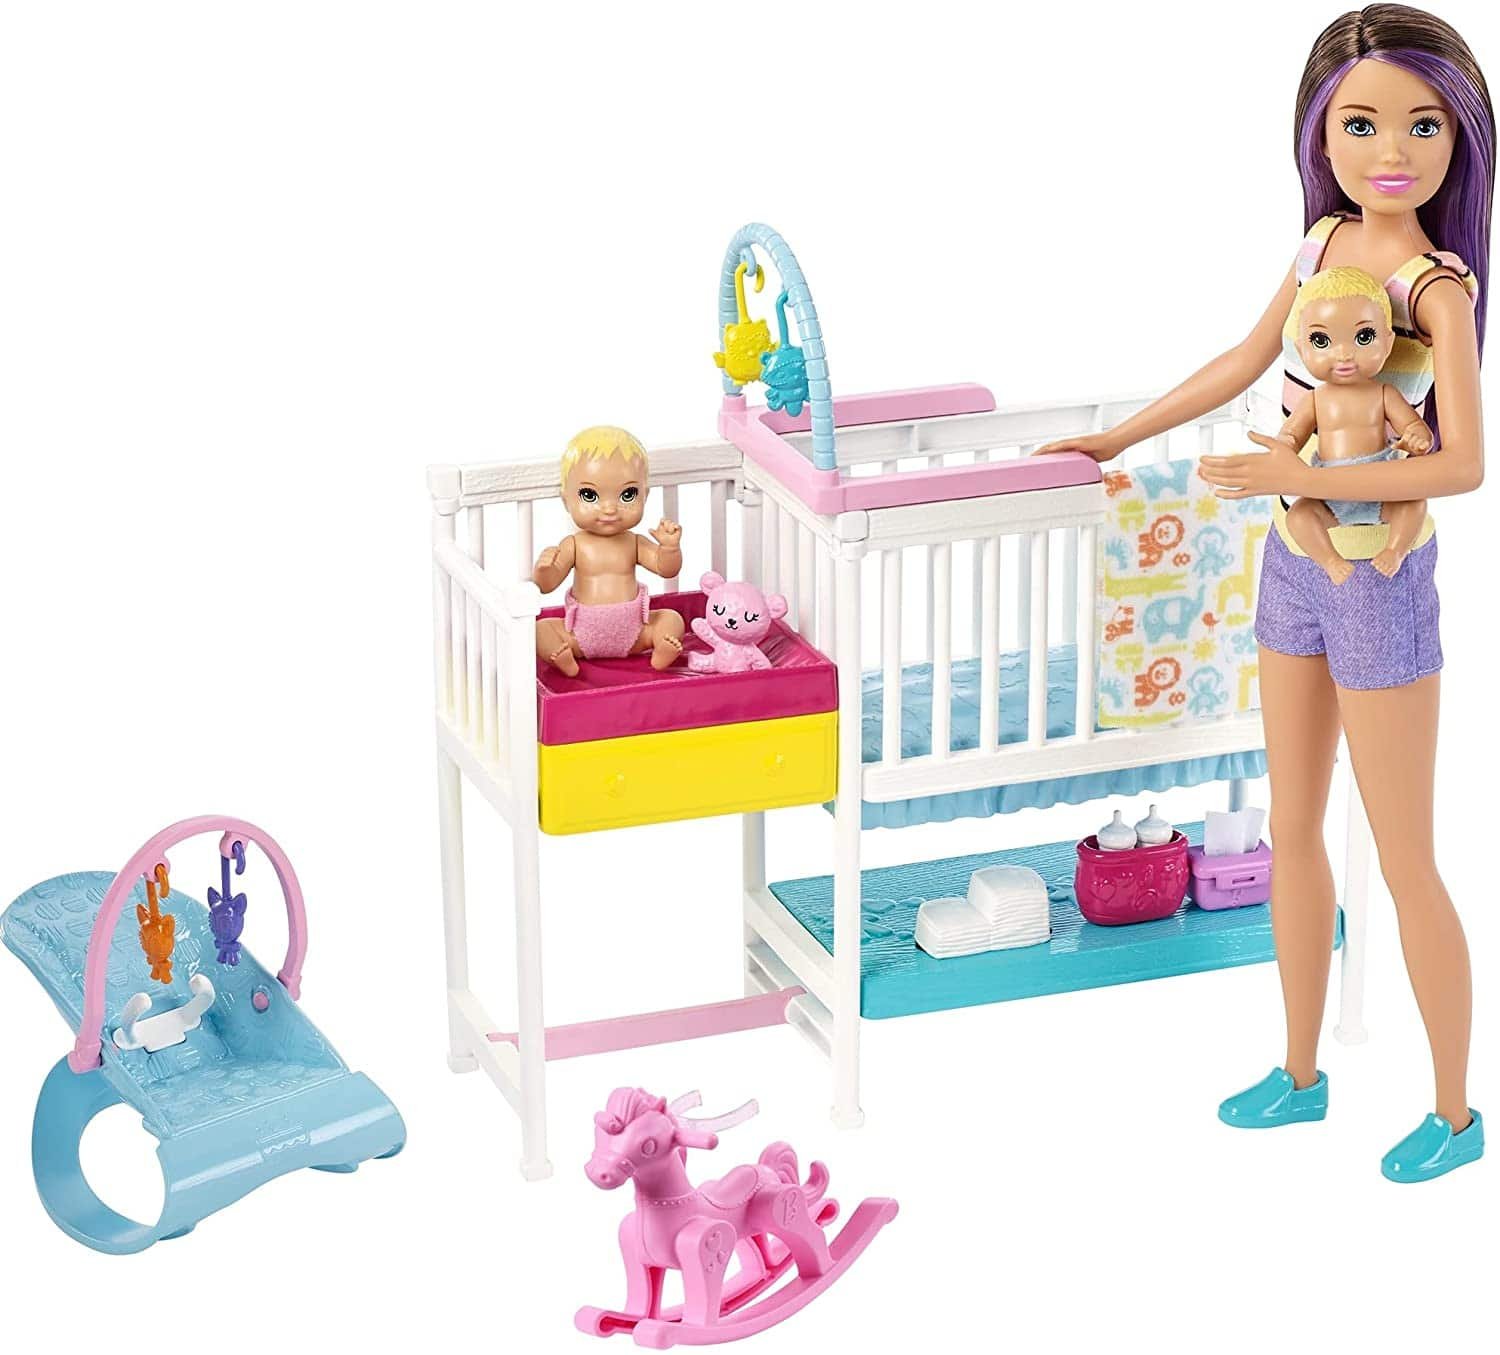 3. Barbie Nursery Playset with Skipper Babysitters Doll